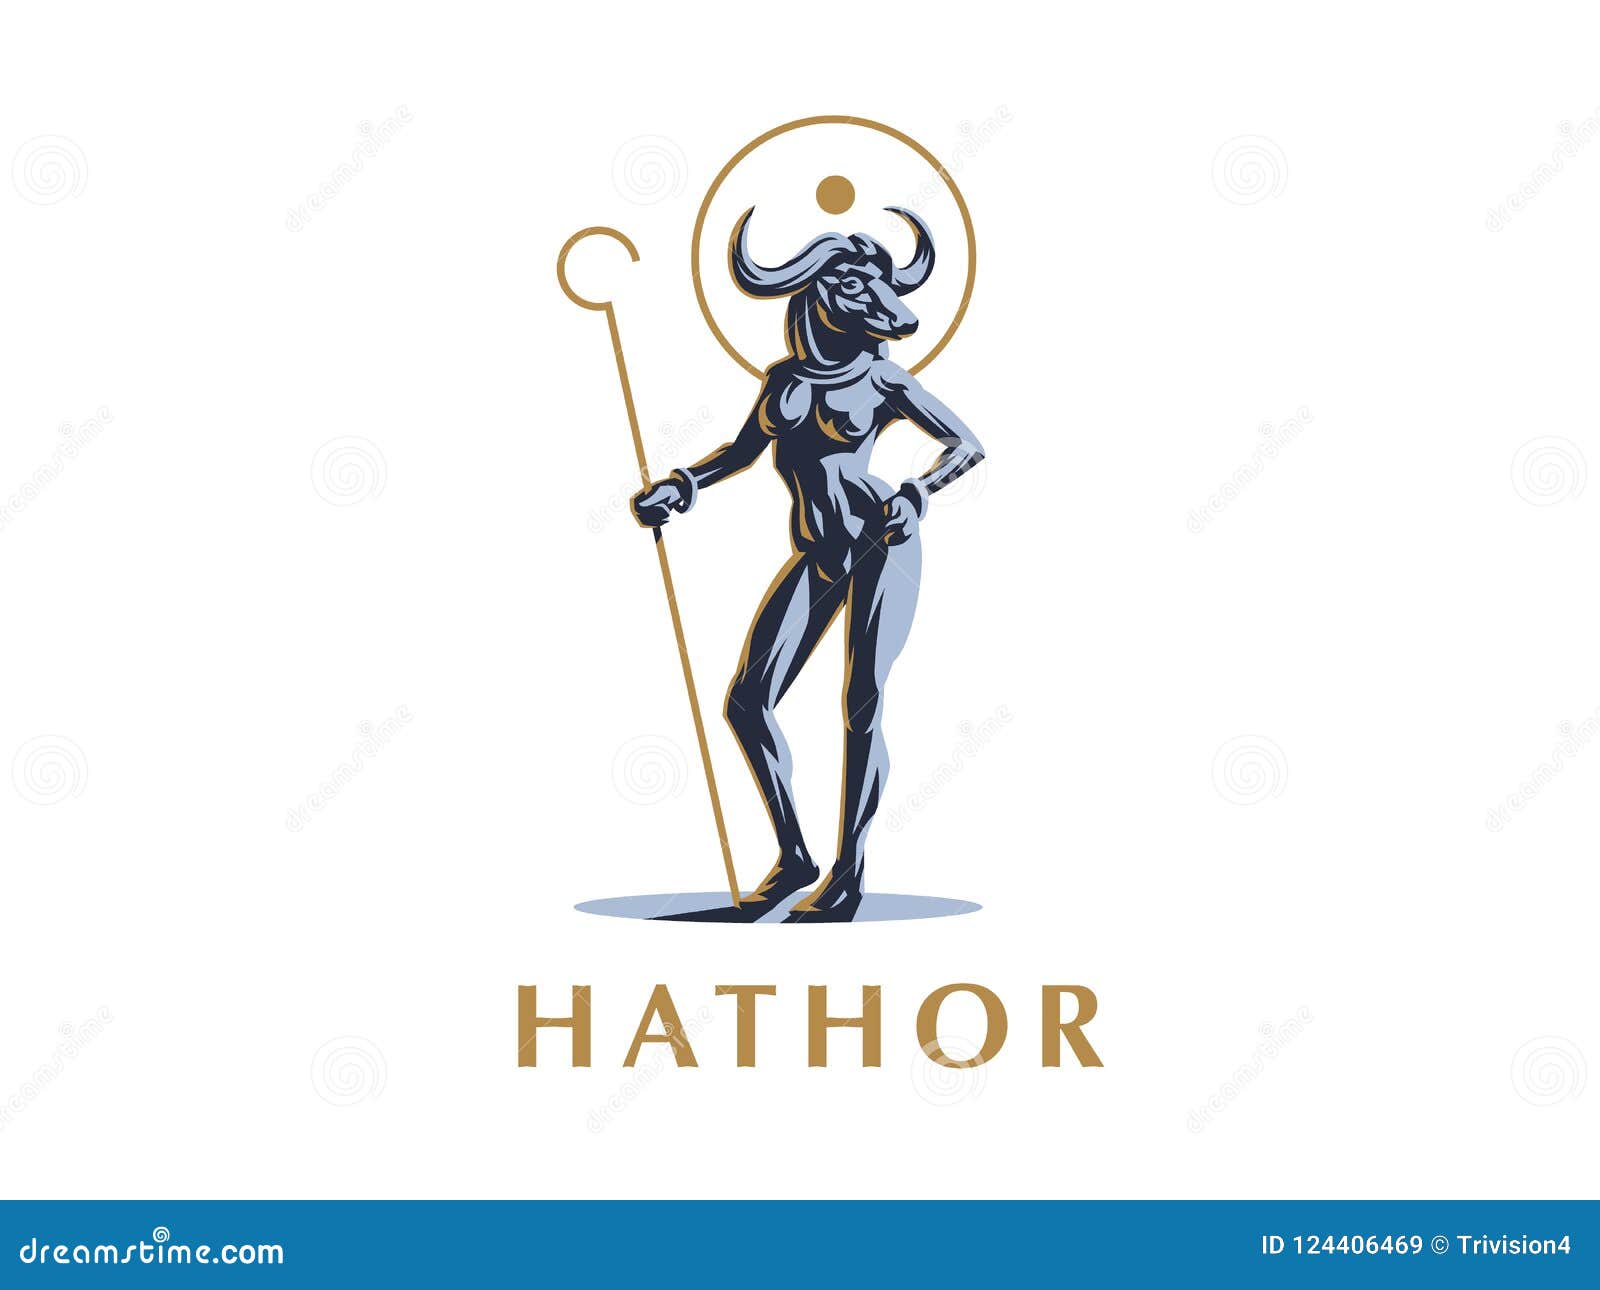 3. Hathor Egyptian Goddess Tattoo Ideas - wide 2